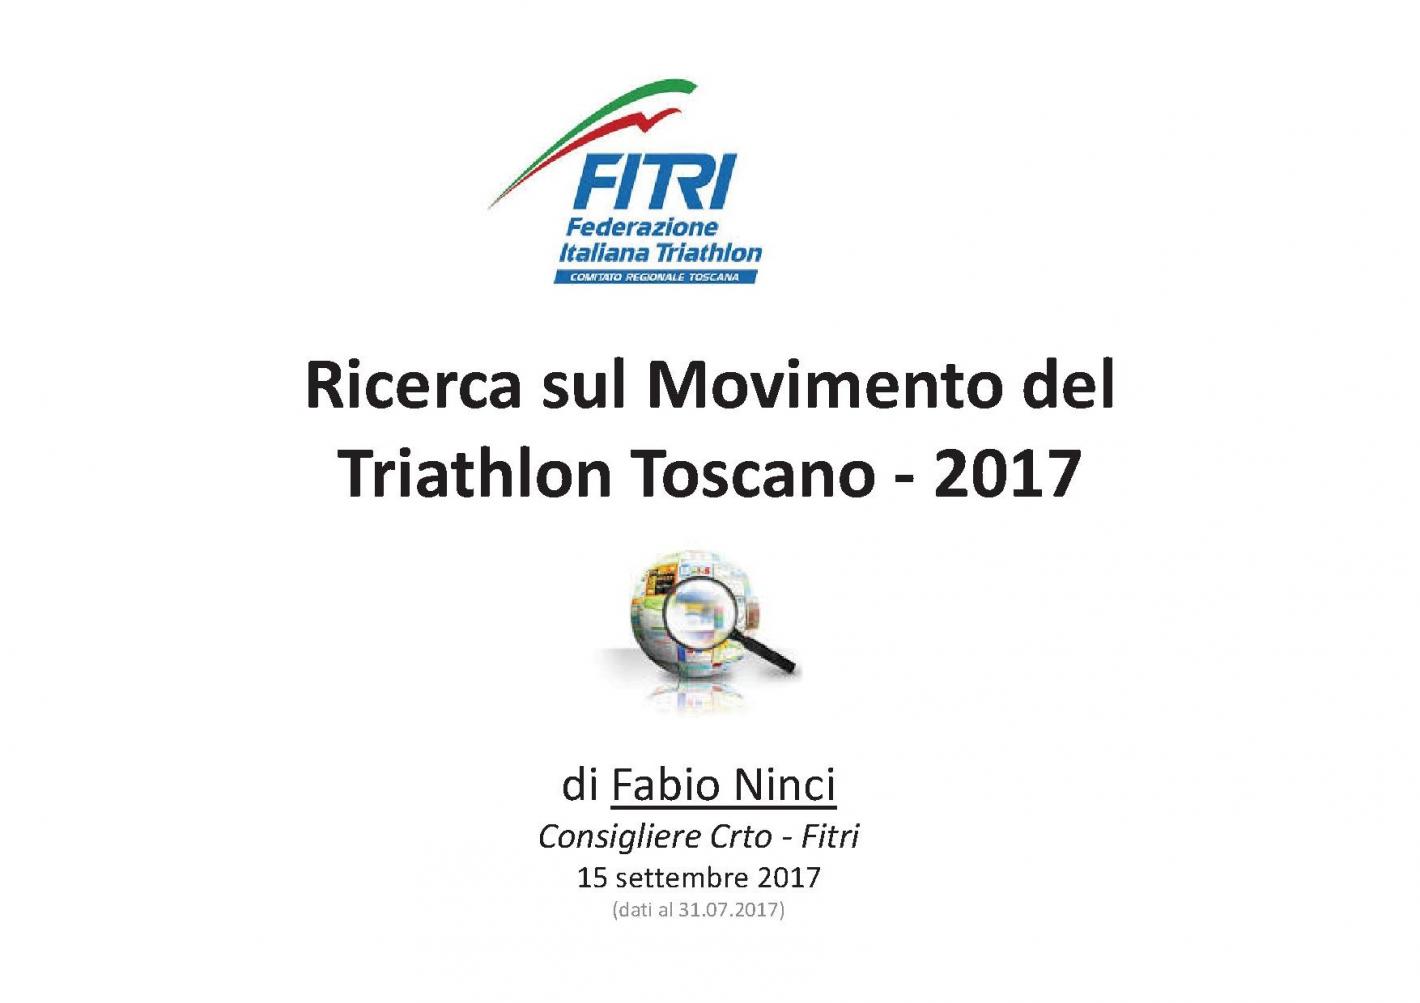 images/toscana/medium/Ricerca_sul_Movimento_del_Triathlon_Toscano.jpg